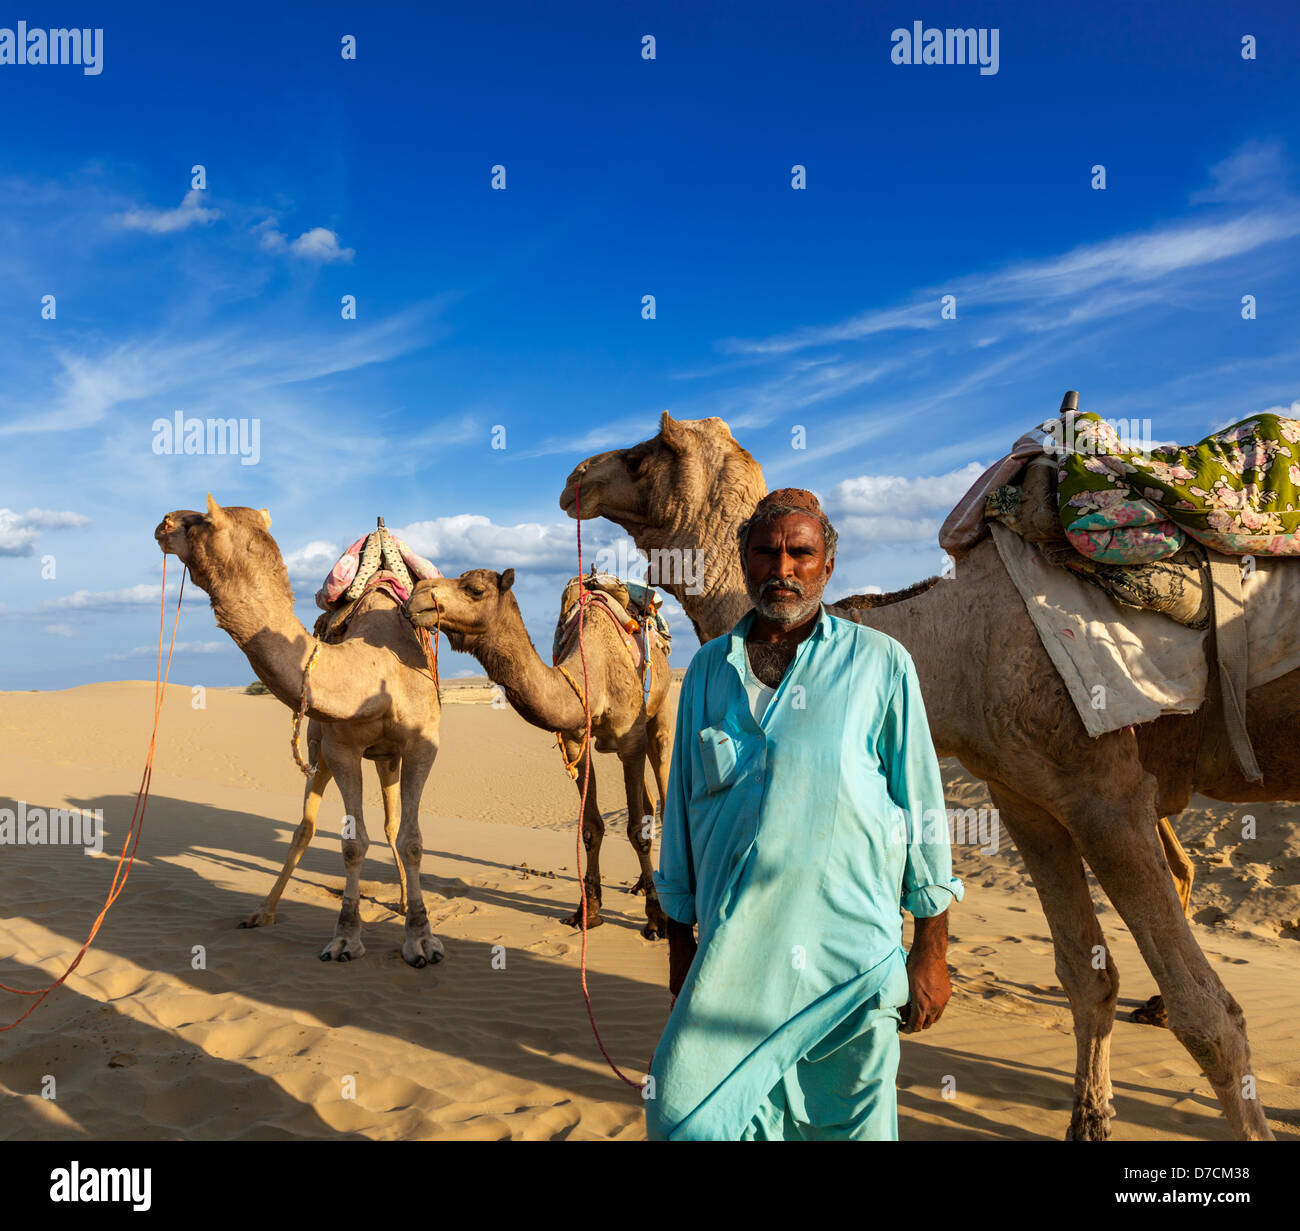 Rajasthan travel background - Indian man cameleer (camel driver) portrait with camels in dunes of Thar desert. Jaisalmer, Rajast Stock Photo